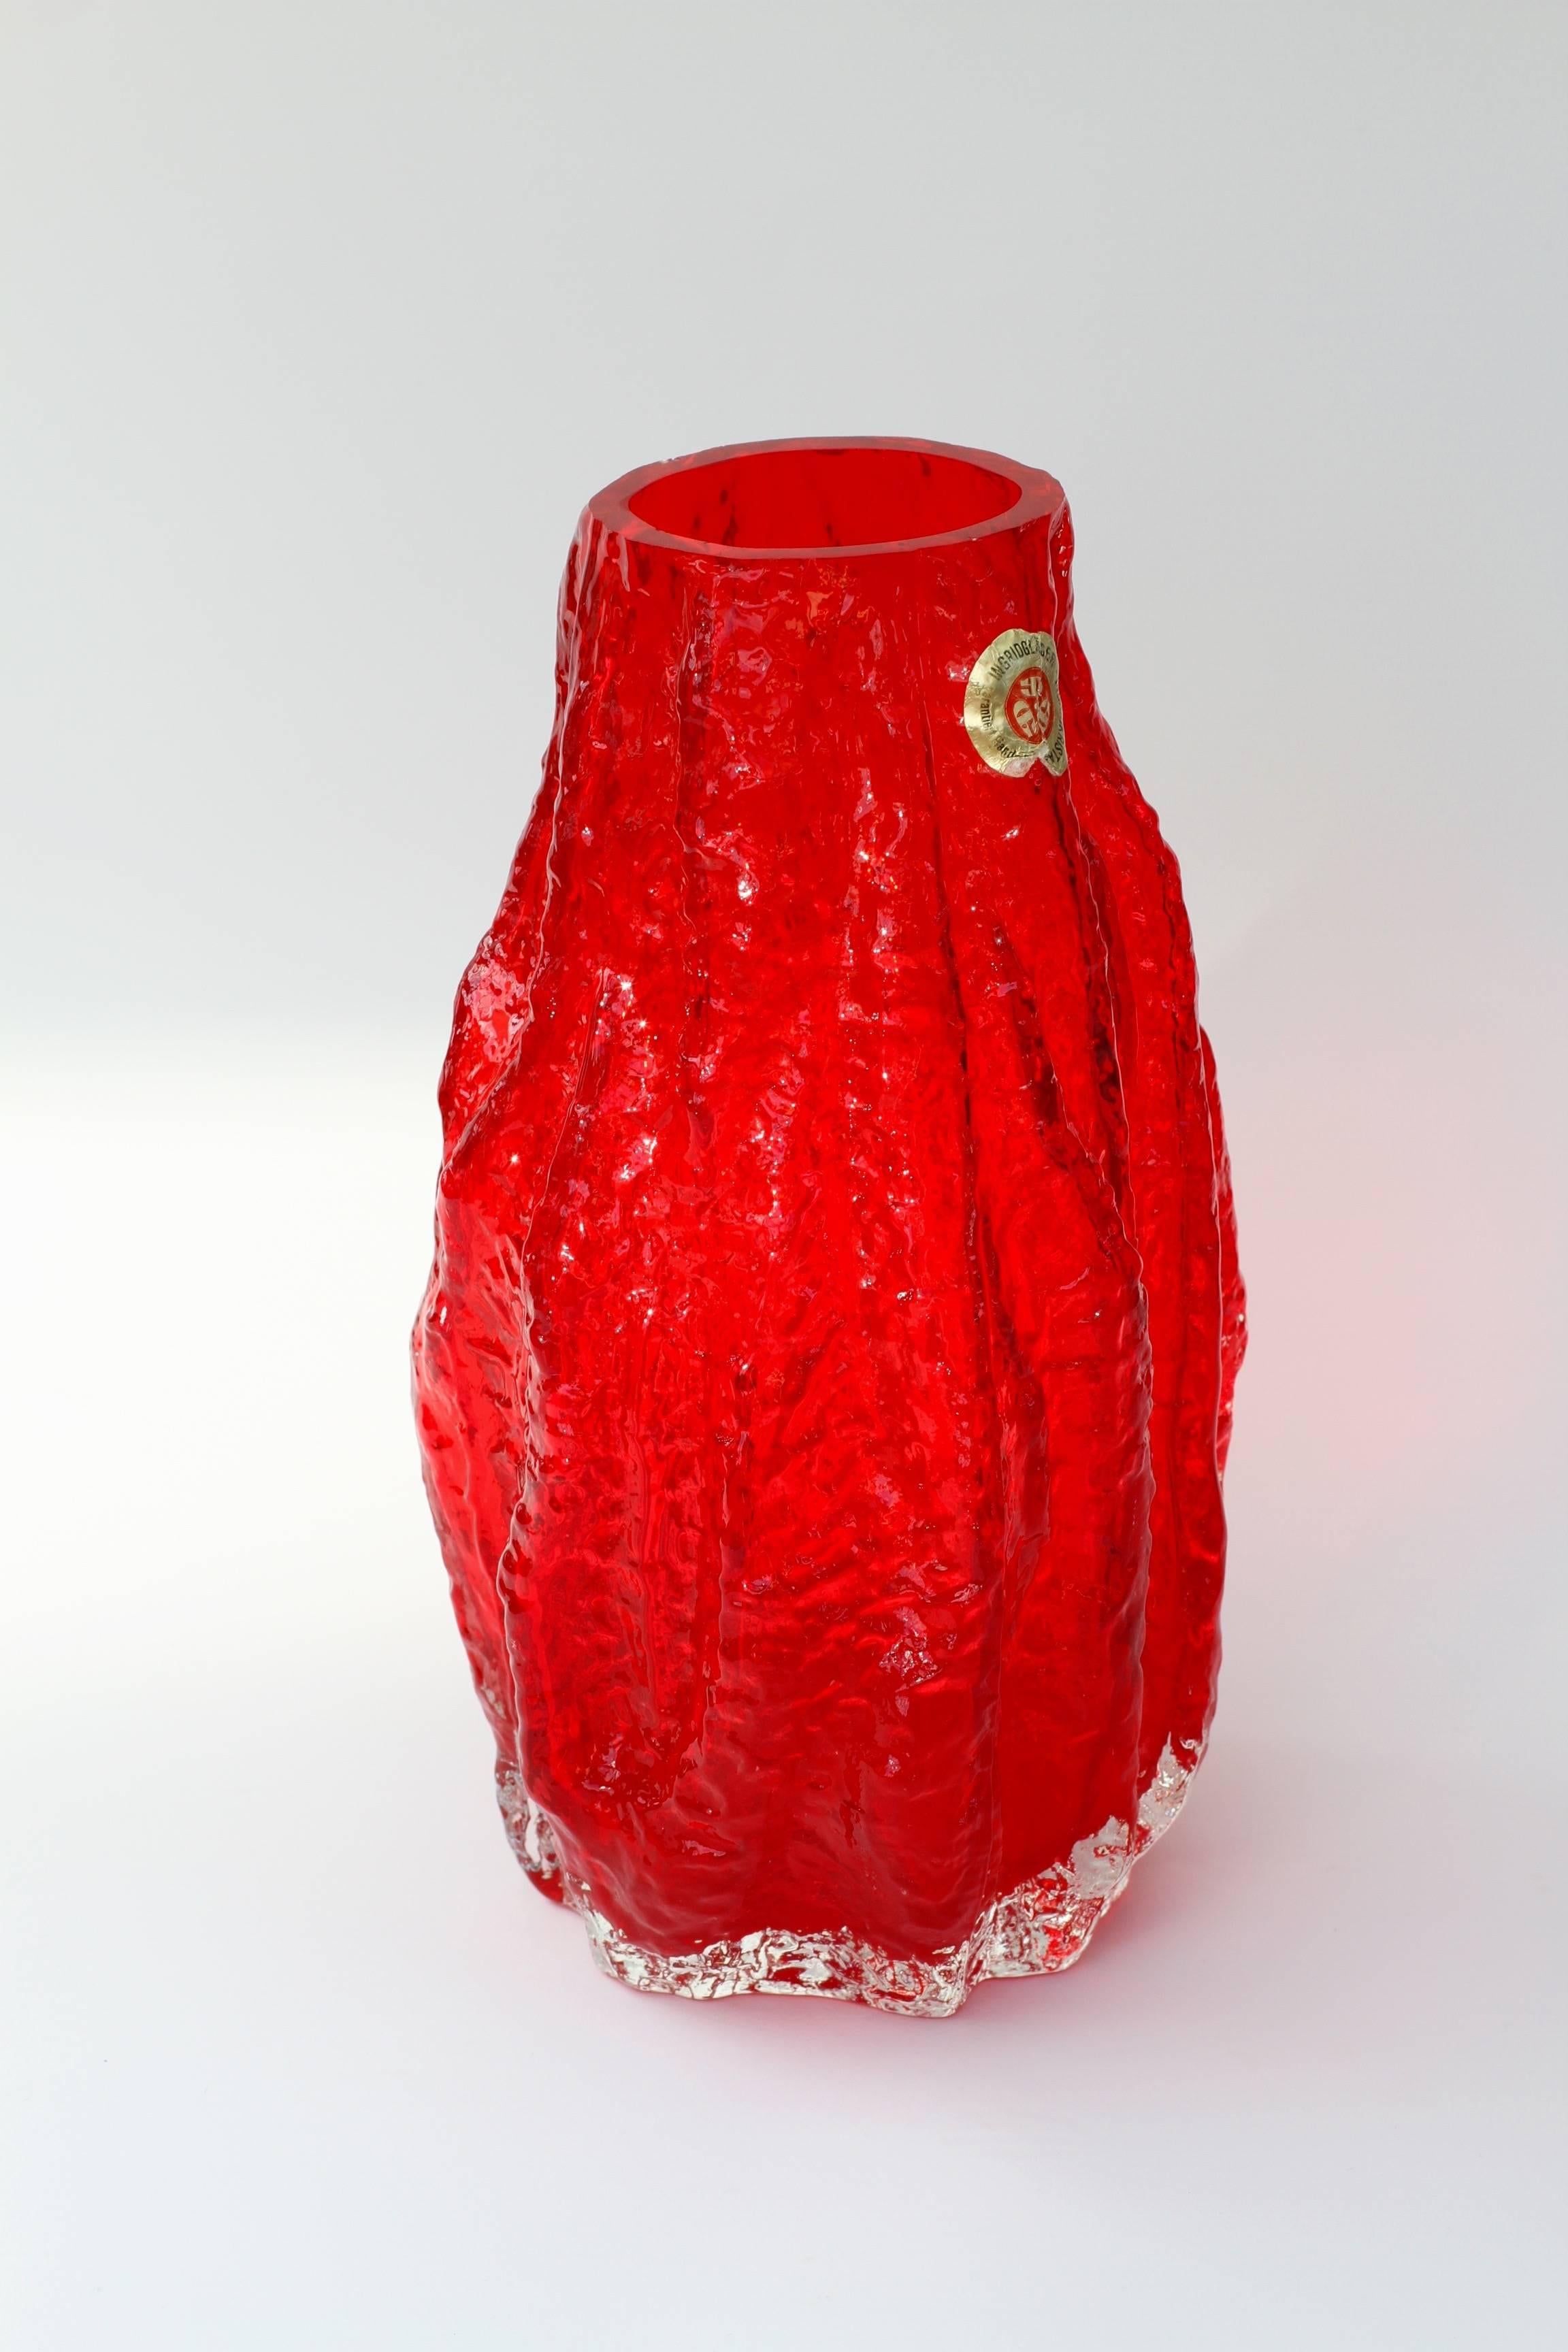 Blown Glass Vintage German Vibrant Red Glass Tree Bark Vase by Ingrid Glas, circa 1970s For Sale